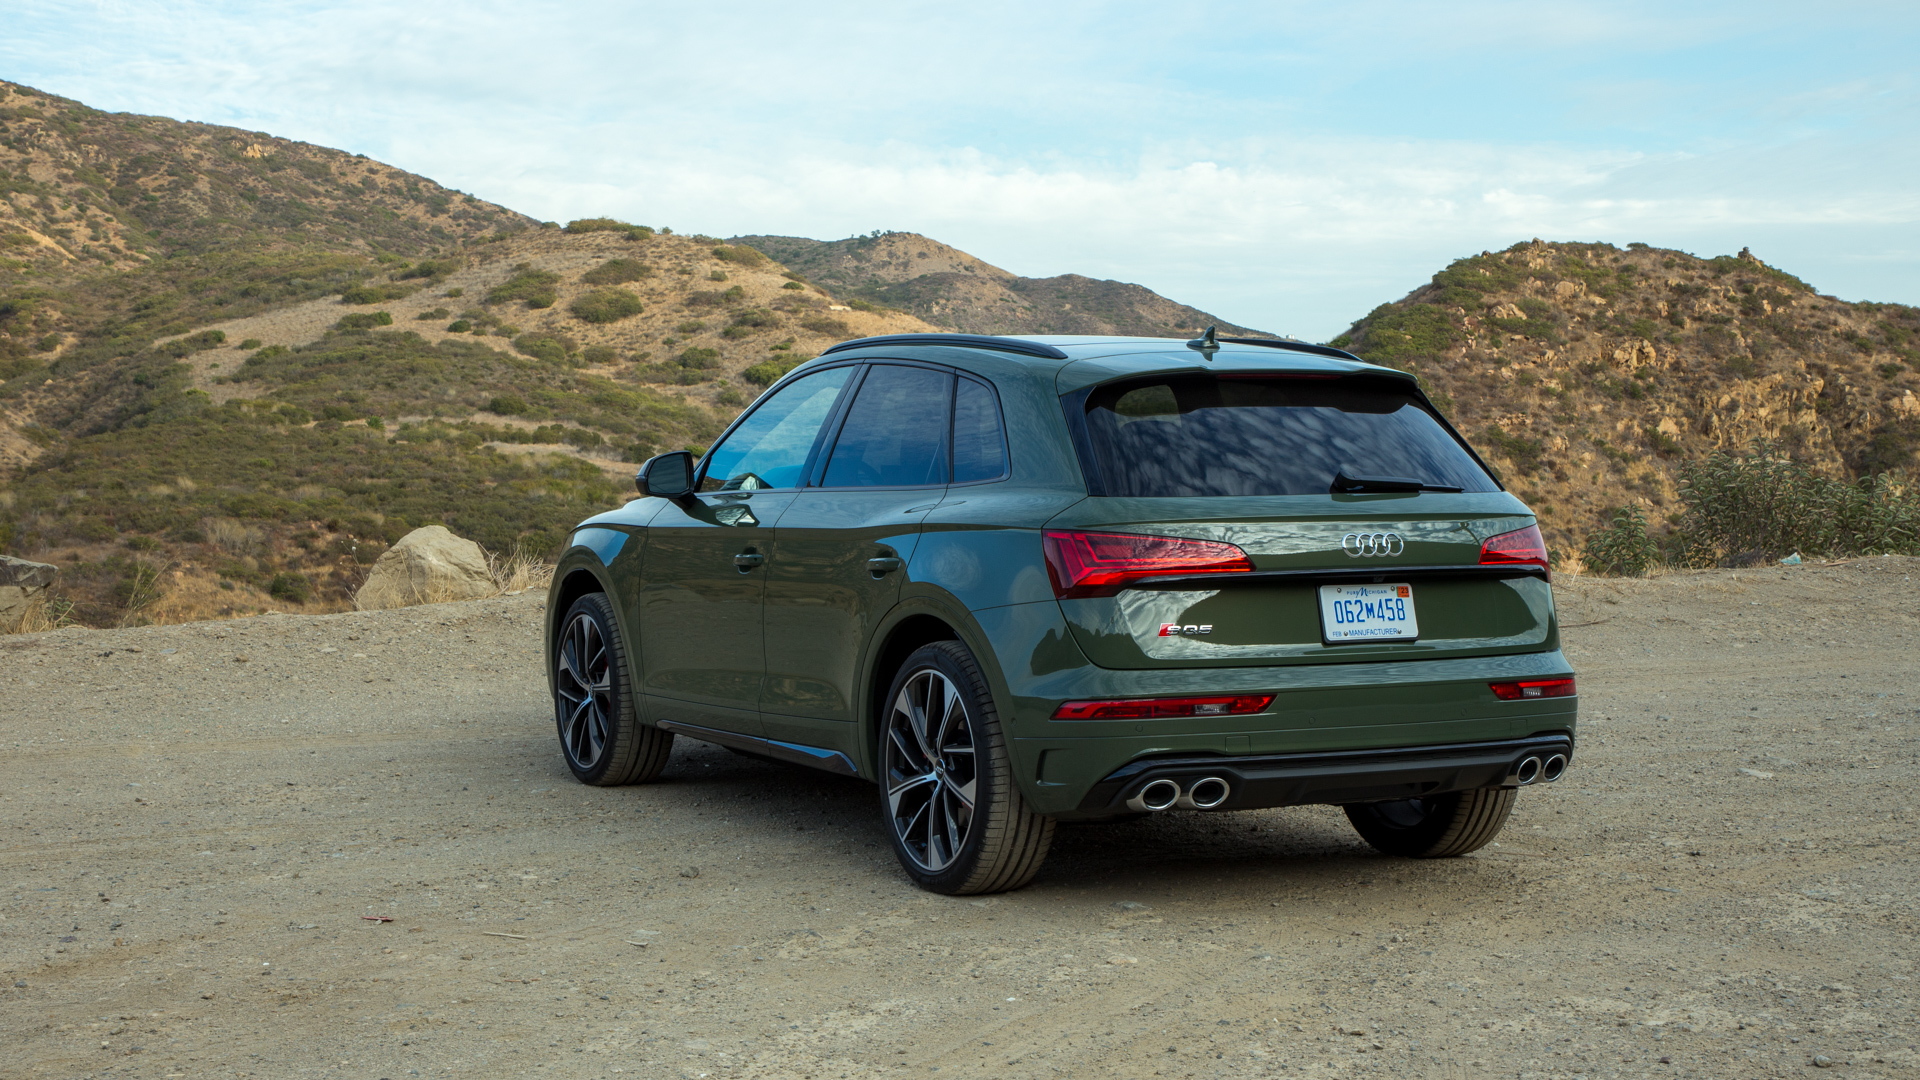 Ultimate Luxury: The 2021 Audi SQ5